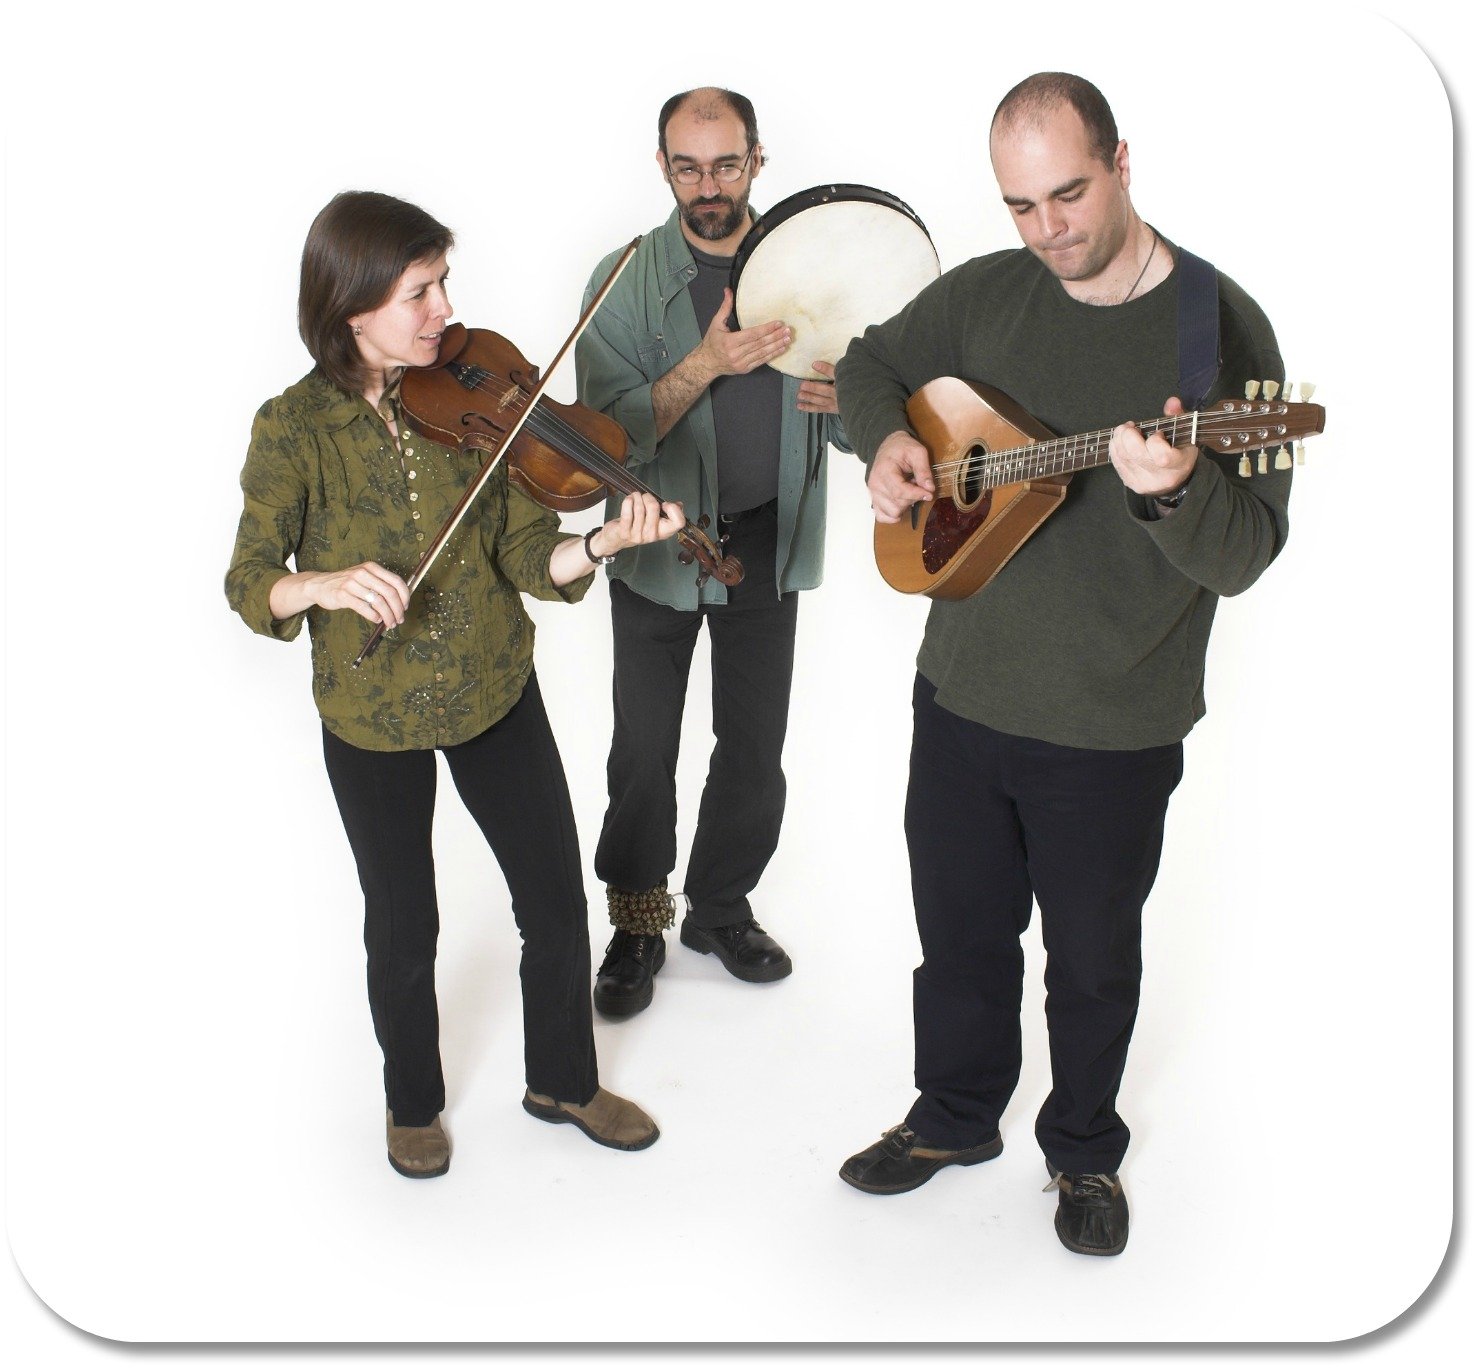 Irish Expressions - small group playing traditional Irish instruments.